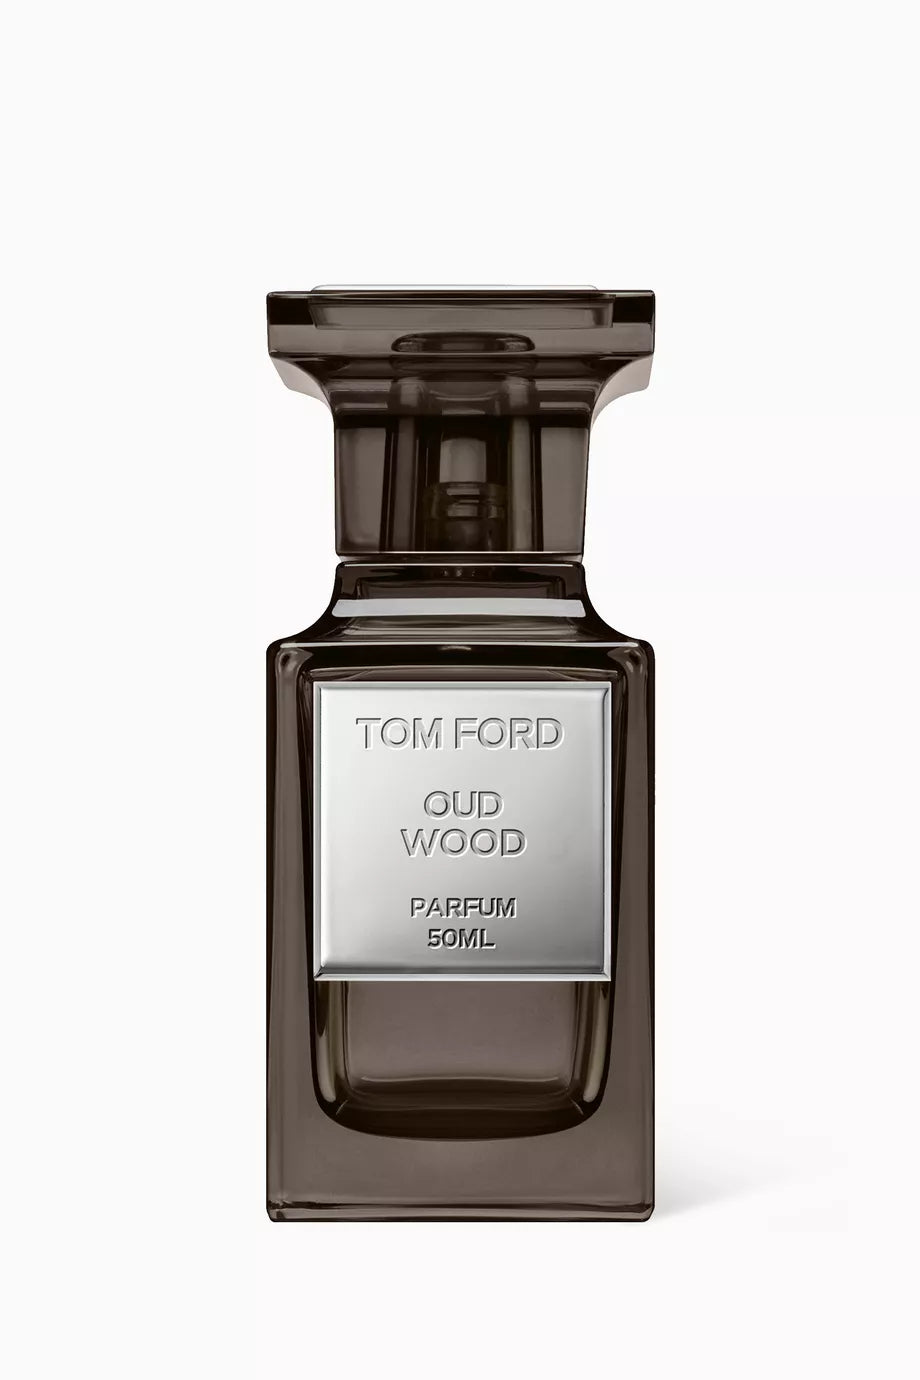 TOM FORD Oud Wood Parfum 50ml